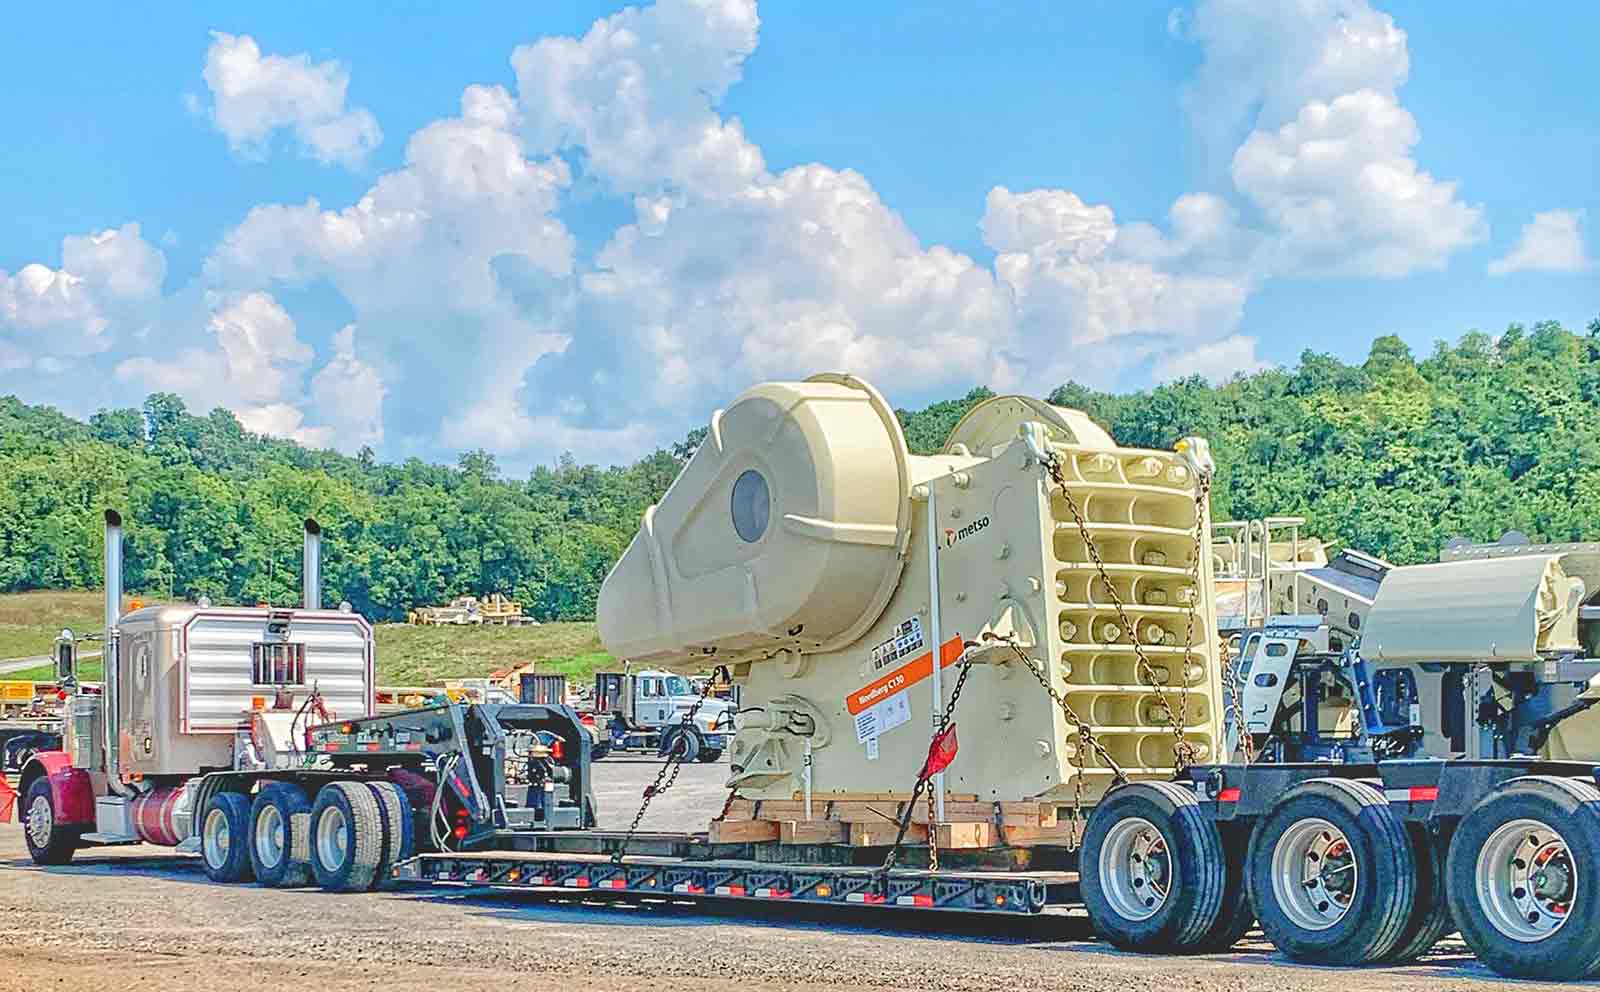 large stone crushing machine being hauled to a job site